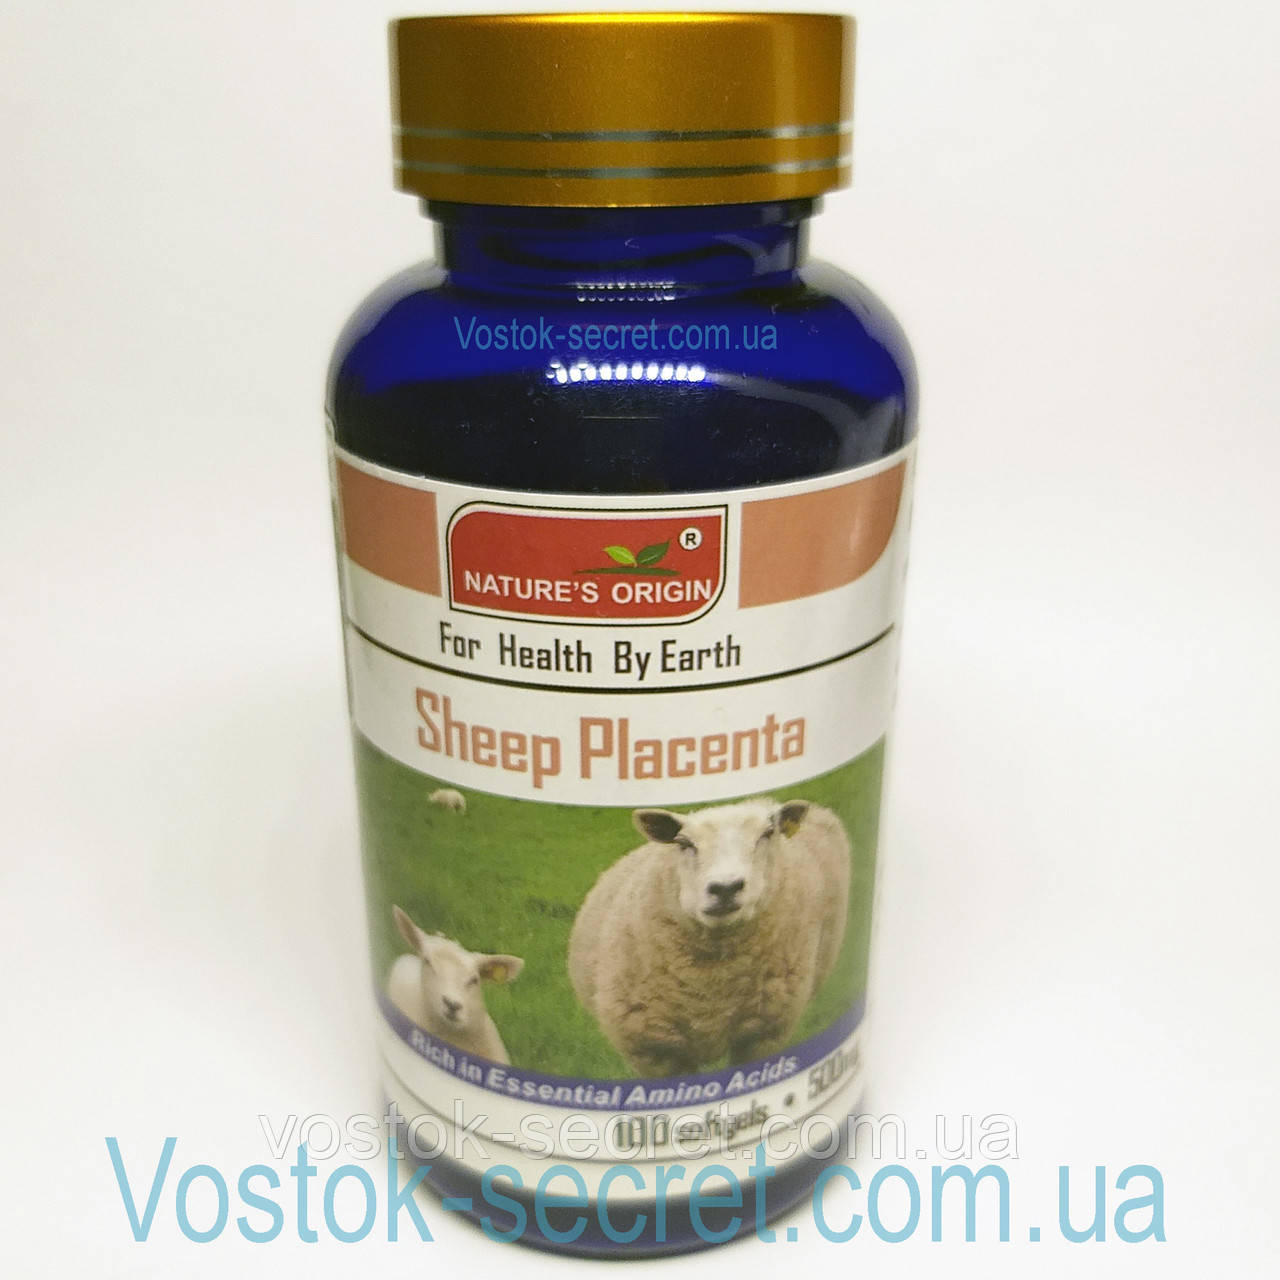 Капсули Sleep Placenta (Плацента овець) /100 шт./ Незамінні амінокислоти